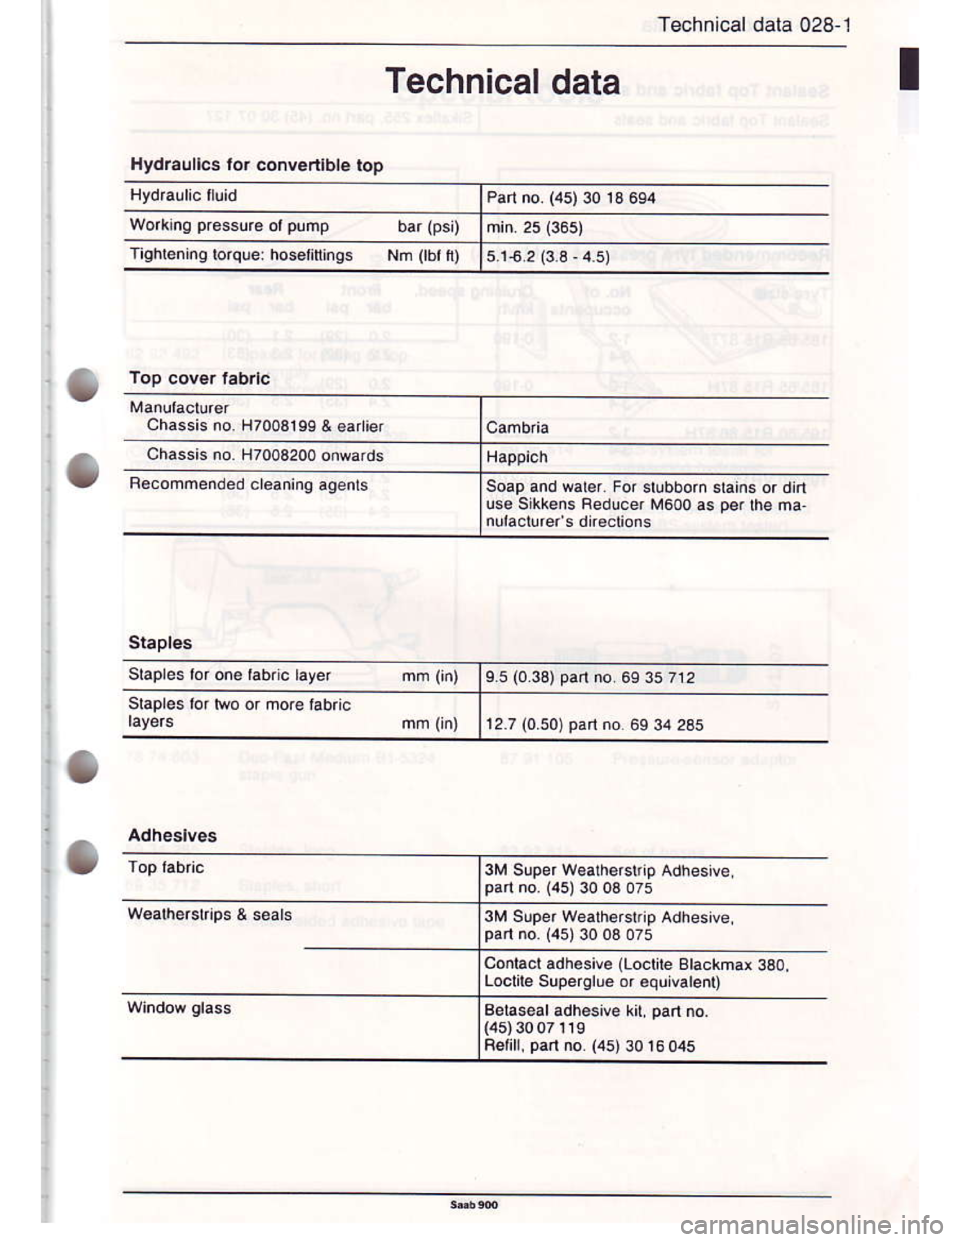 SAAB 900 1986  Service Manual Downloaded from www.Manualslib.com manuals search engine Technical dala 028-1
Technical data
worlung pressure ol pump
Chas.is no. H7003109
hin 2s (36s)
Iighr€nin9 Iorque hosefi nings5.142 {3.3,4.5)
